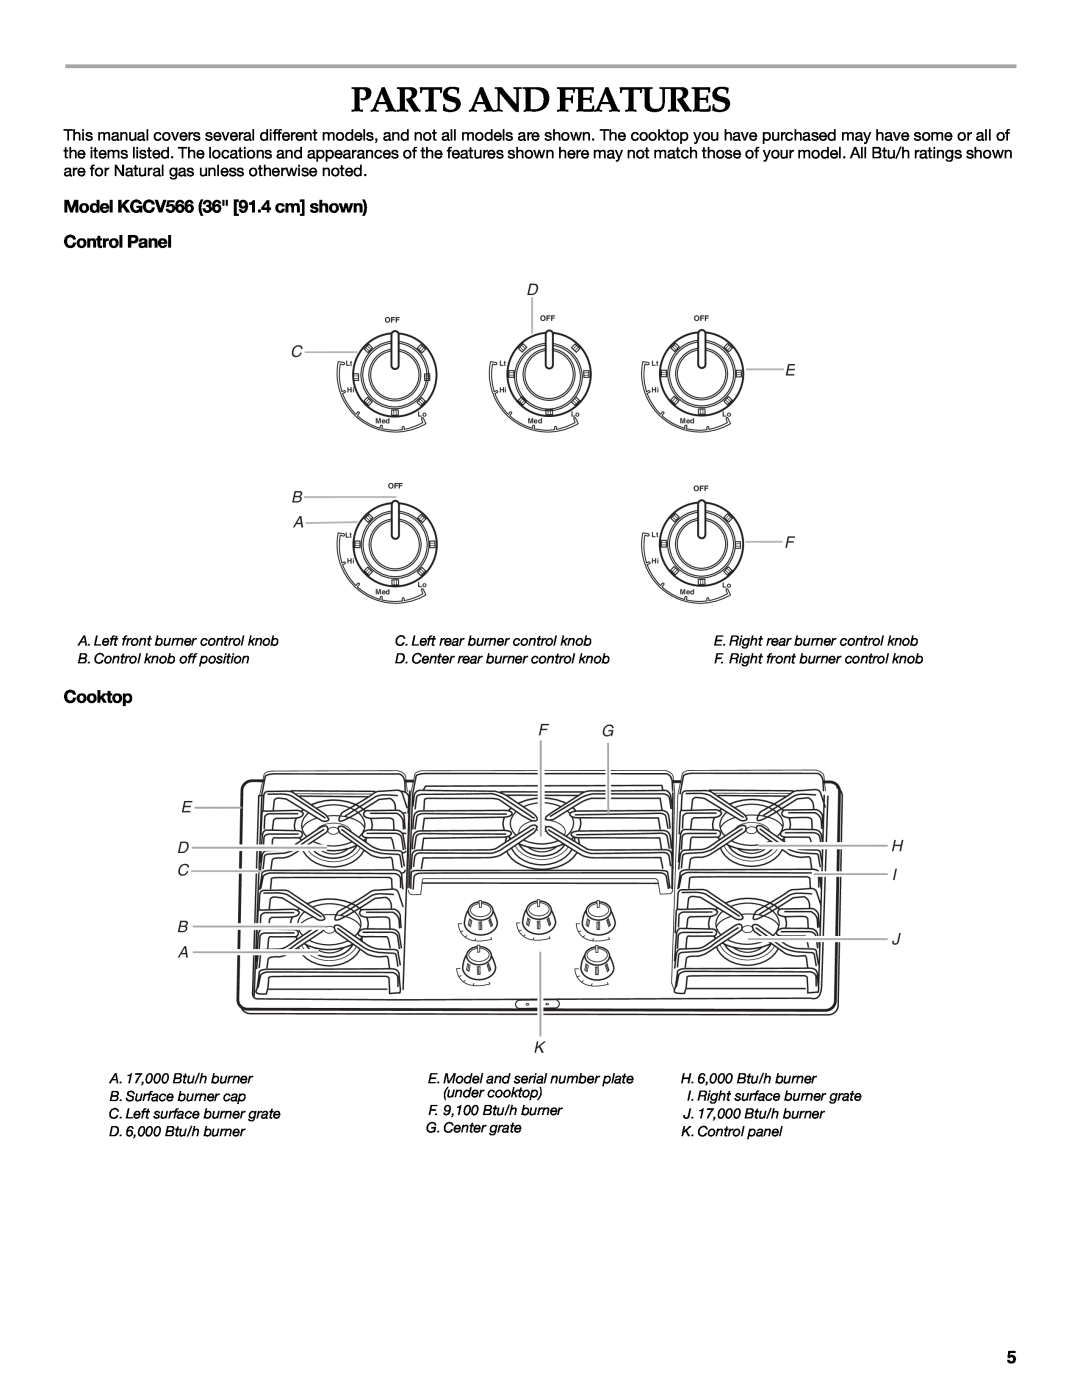 KitchenAid manual Parts And Features, Model KGCV566 36 91.4 cm shown Control Panel, Cooktop, E D C B A, F G K, H I J 